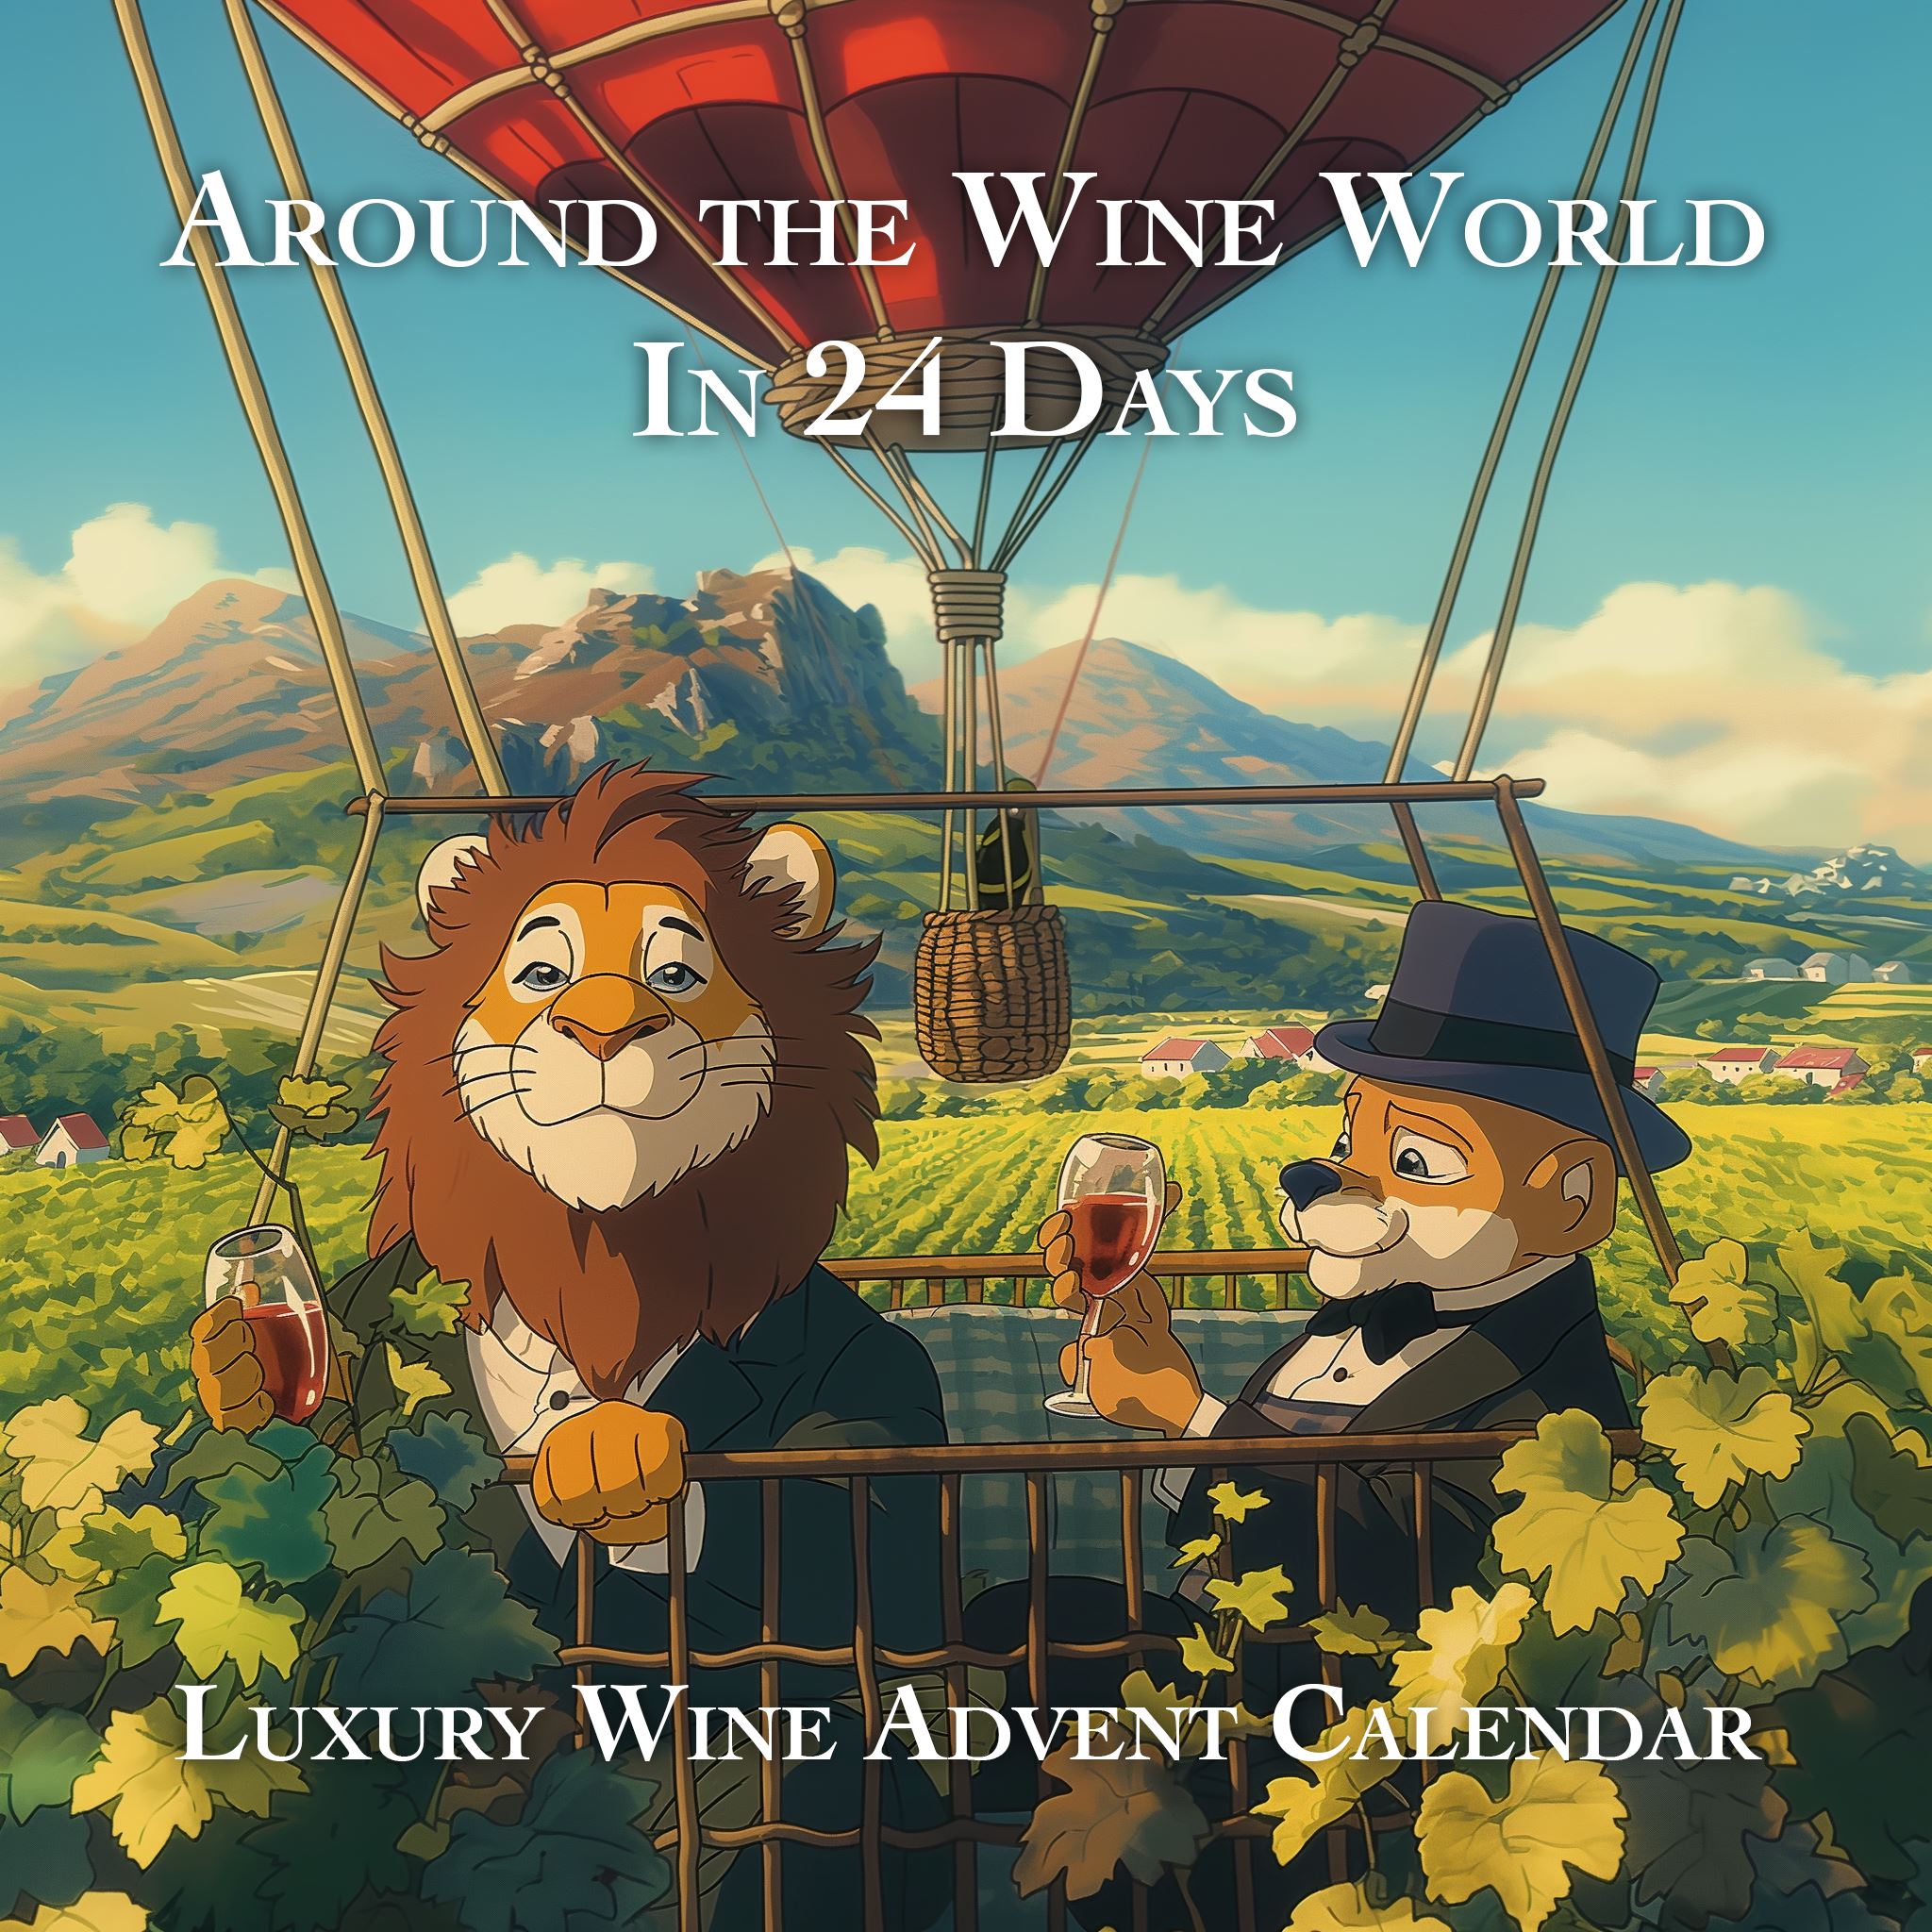 Luxury Wine Advent Calendar - Around The Wine World in 24 Days Wine Online Wine Tasting Club 